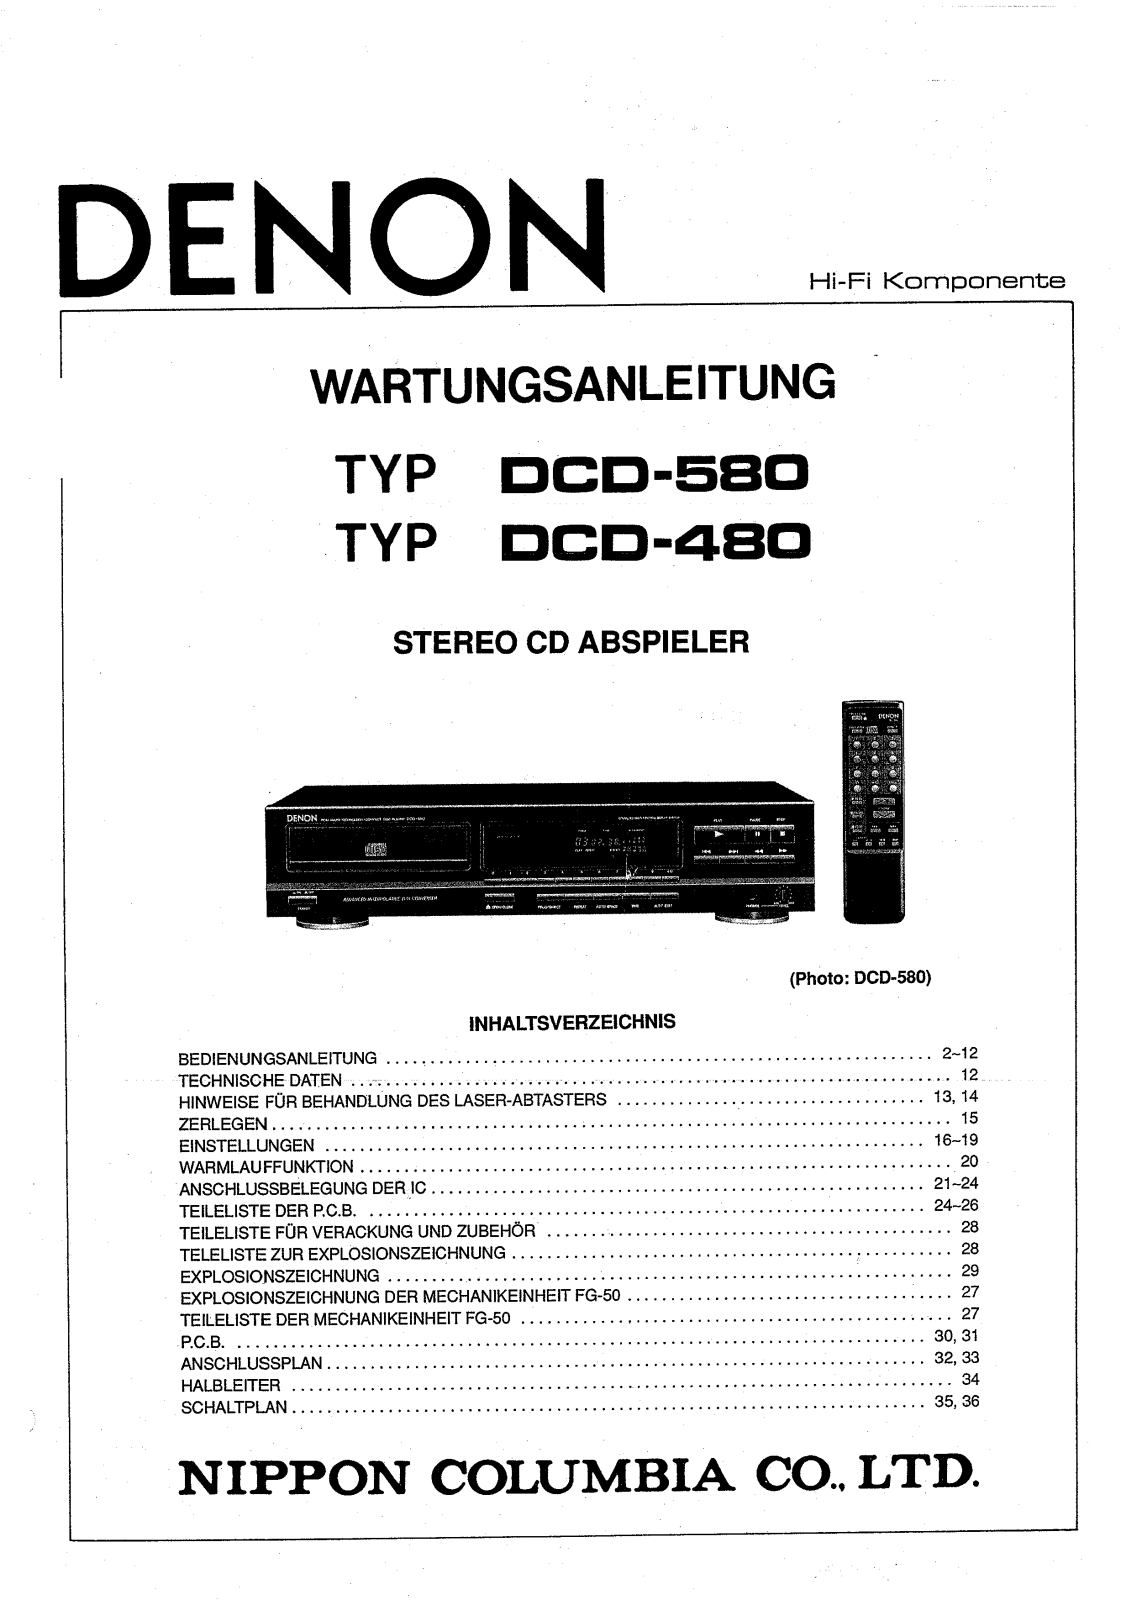 Denon DCD480, DCD580 Service Manual